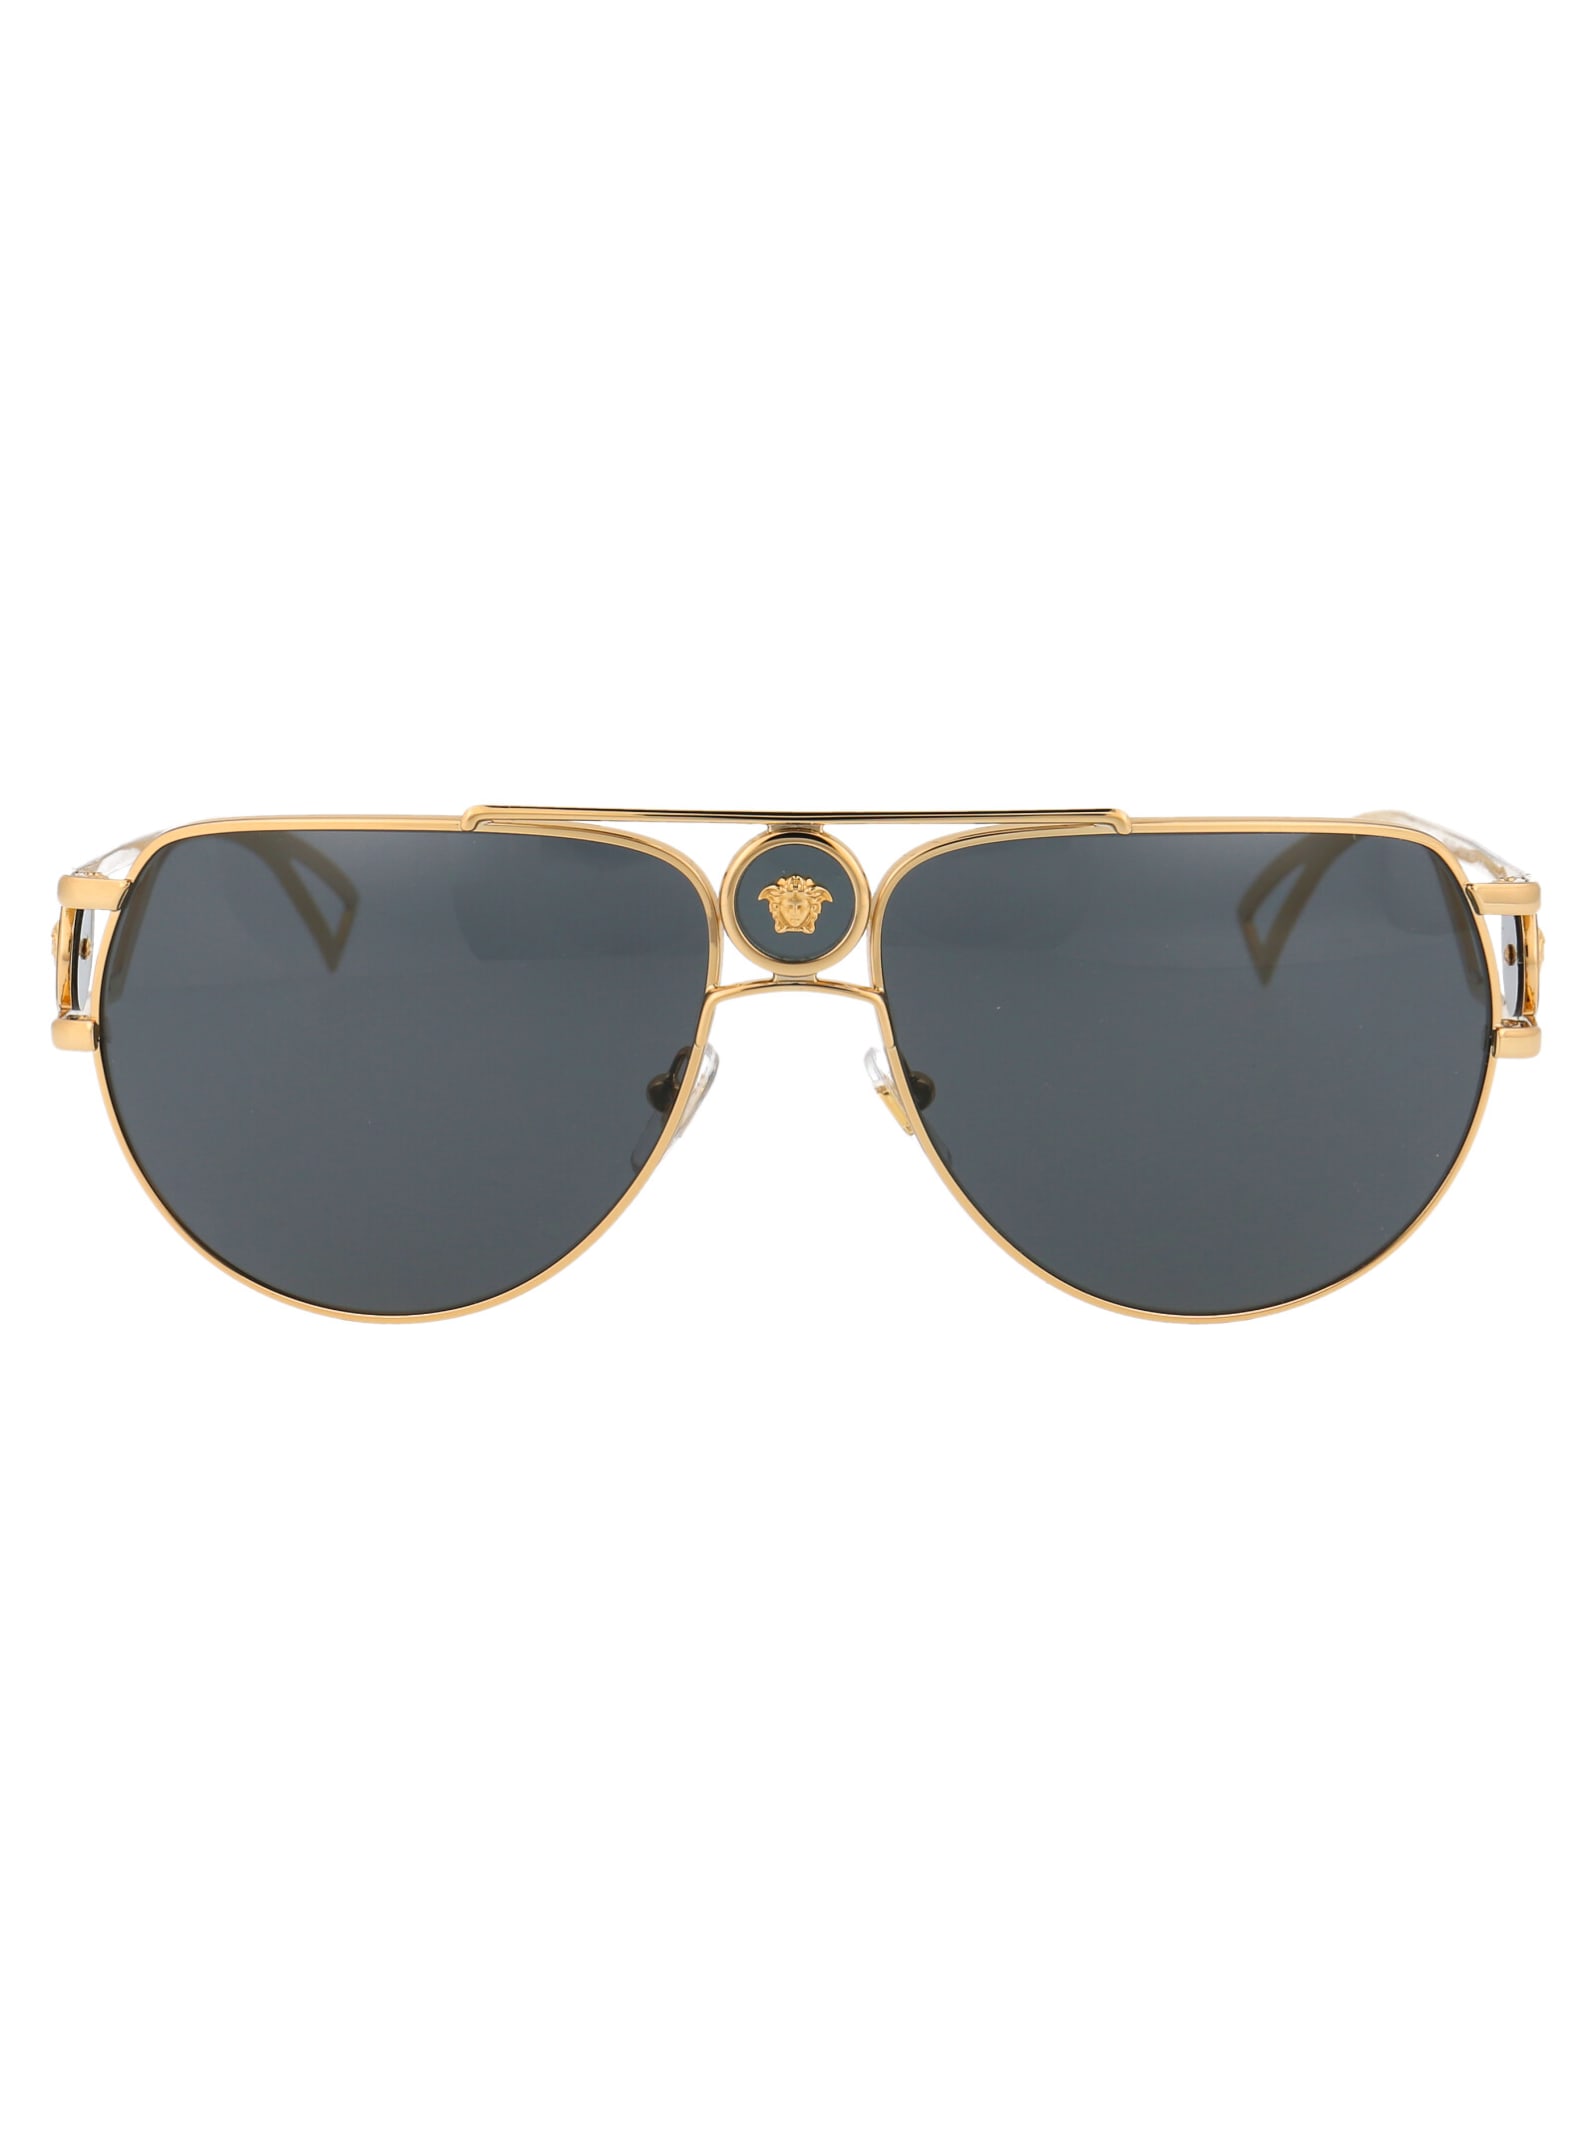 Versace 0ve2225 Sunglasses